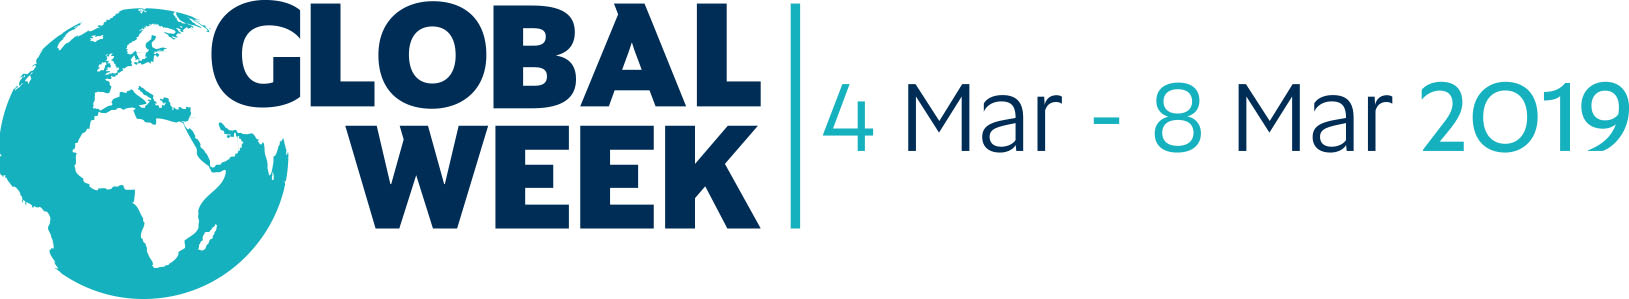 Global Week Logo 2019 - ENGLISH LANDSCAPE.jpg